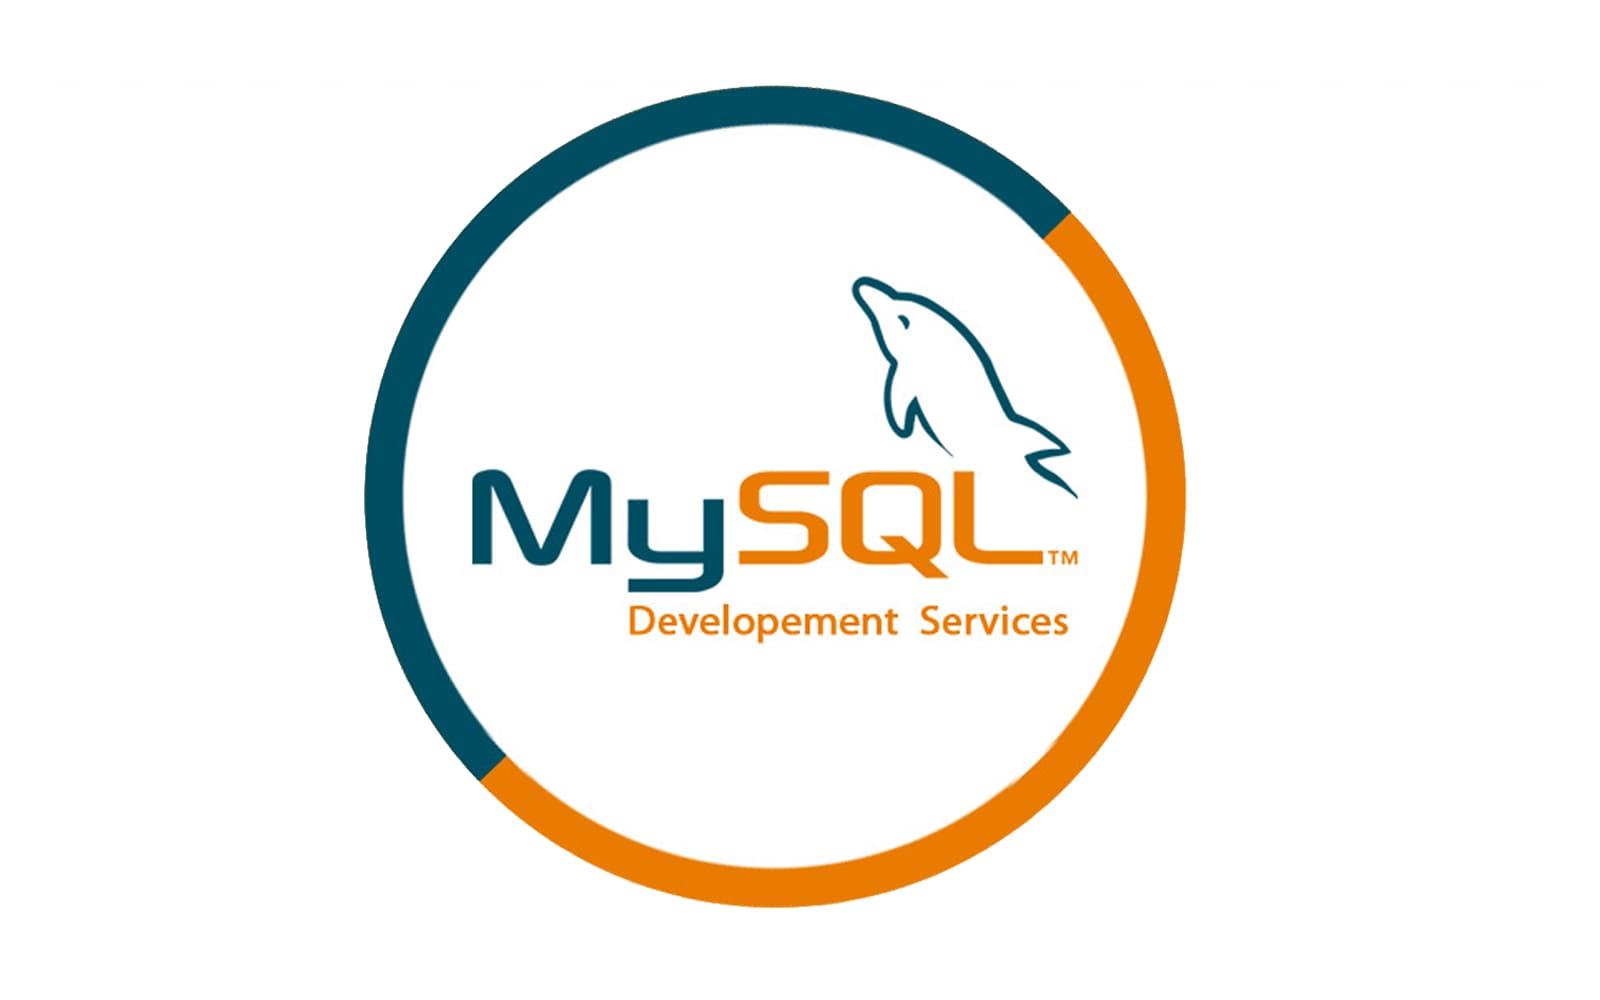 mysql enterprise edition download free